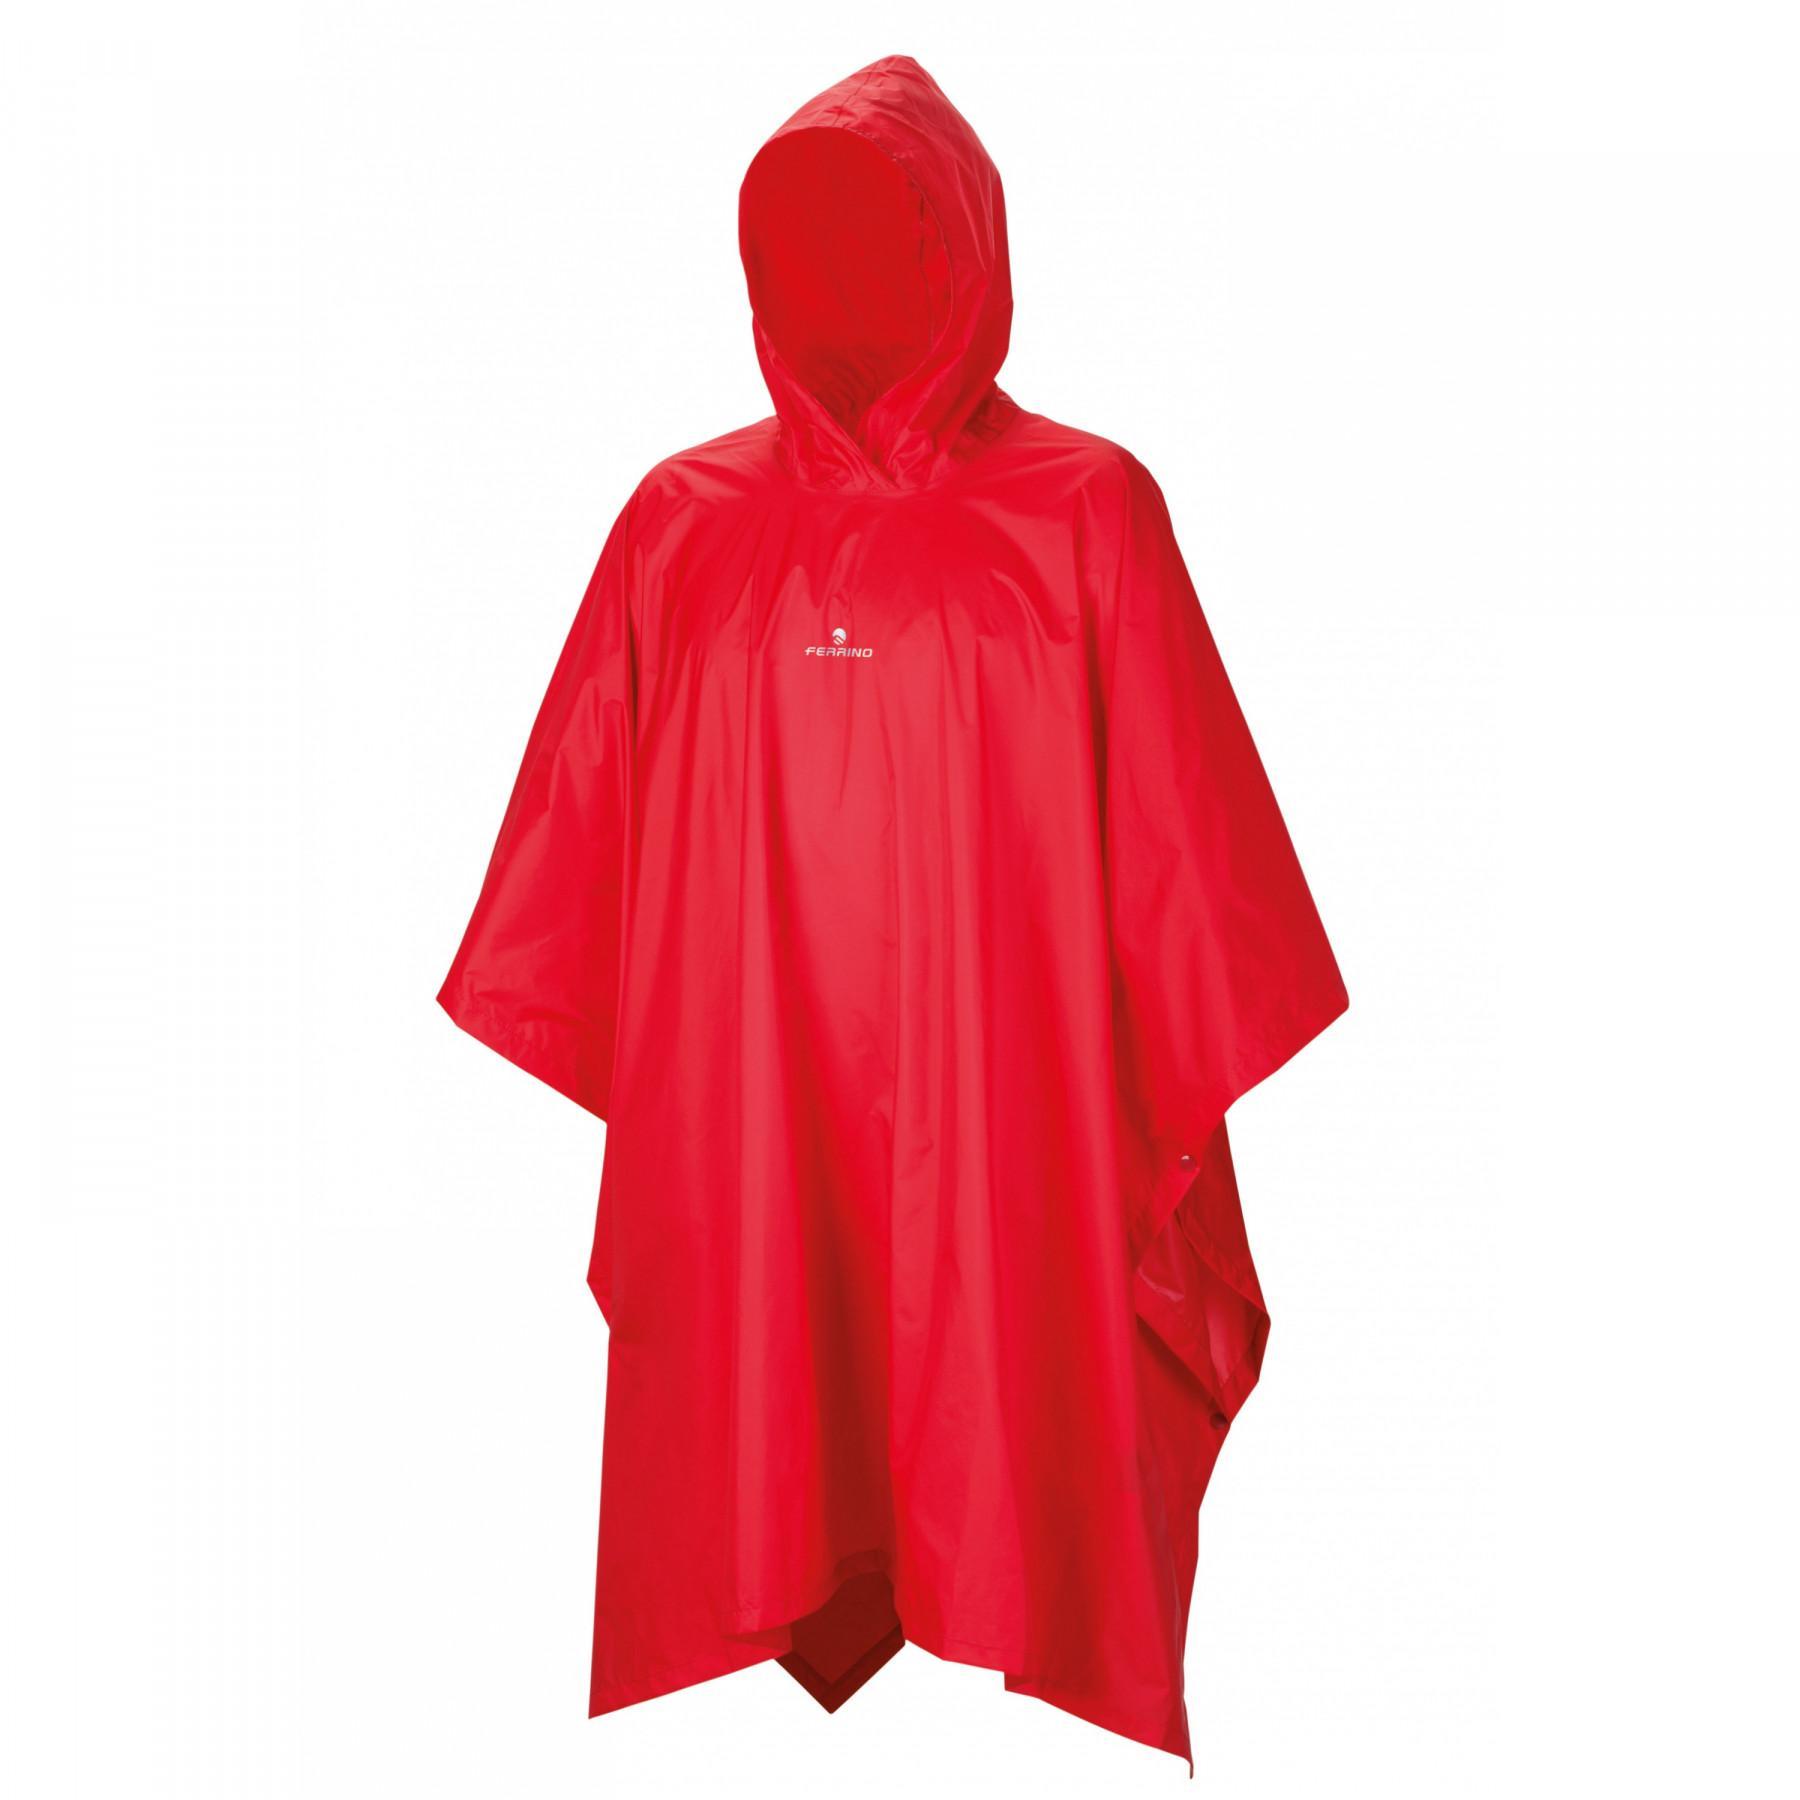 Waterproof poncho for women Ferrino R-cloak